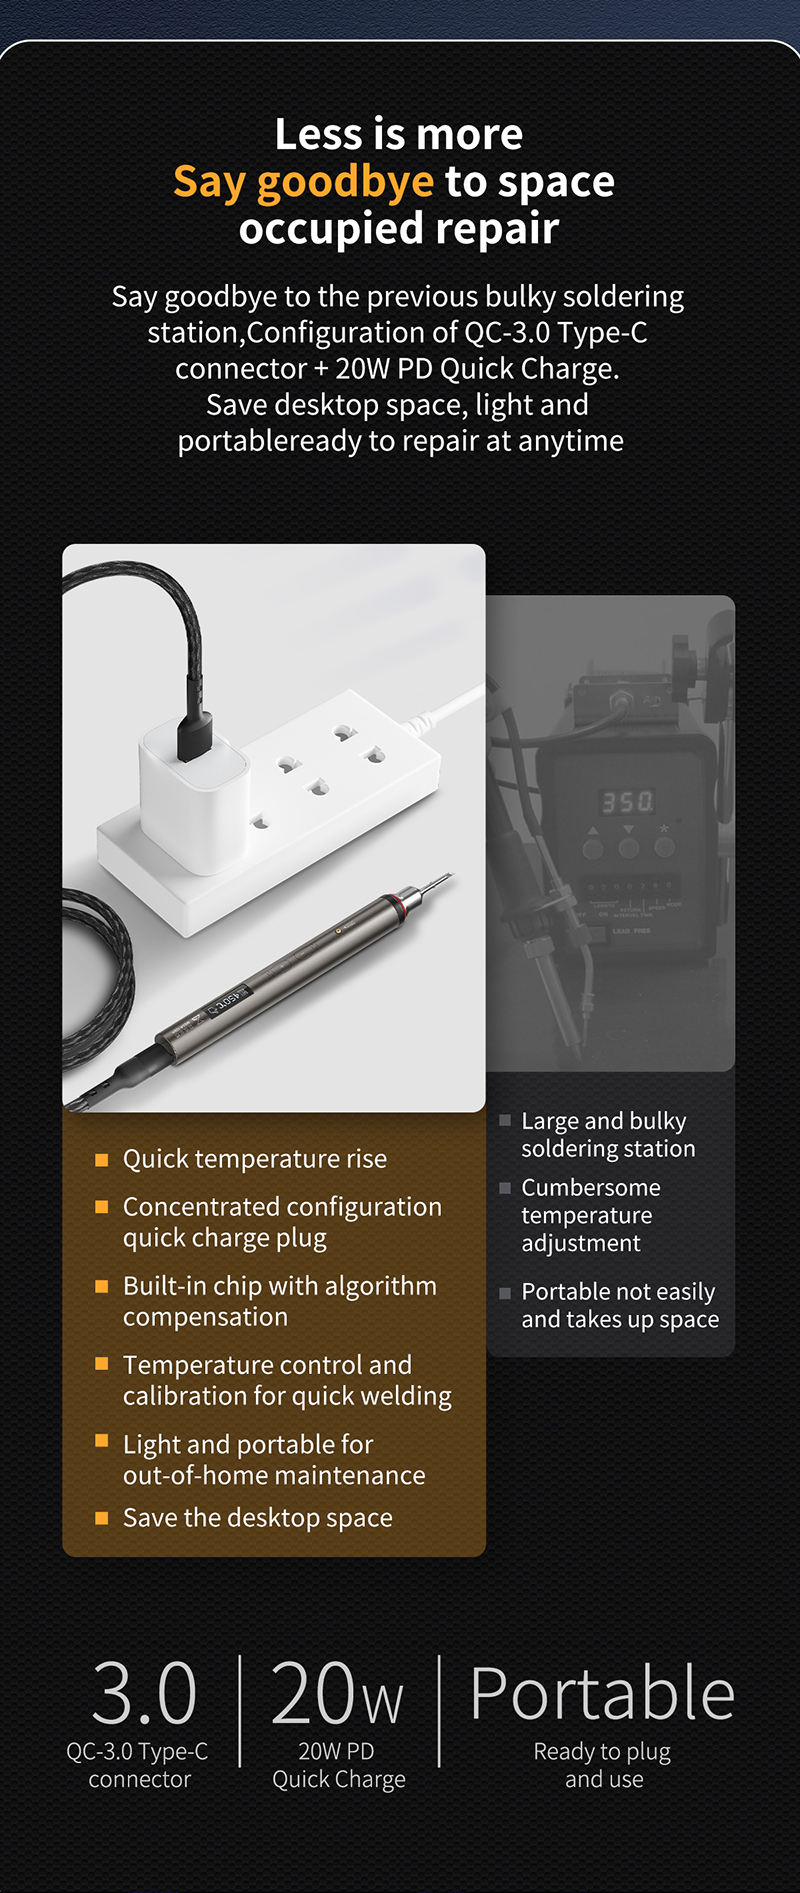 Qianli MEGA-IDEA Quick Charge Nano Electric Soldering Iron 20W LED Display Portable USB Solder Iron Set Welding Rework Tools